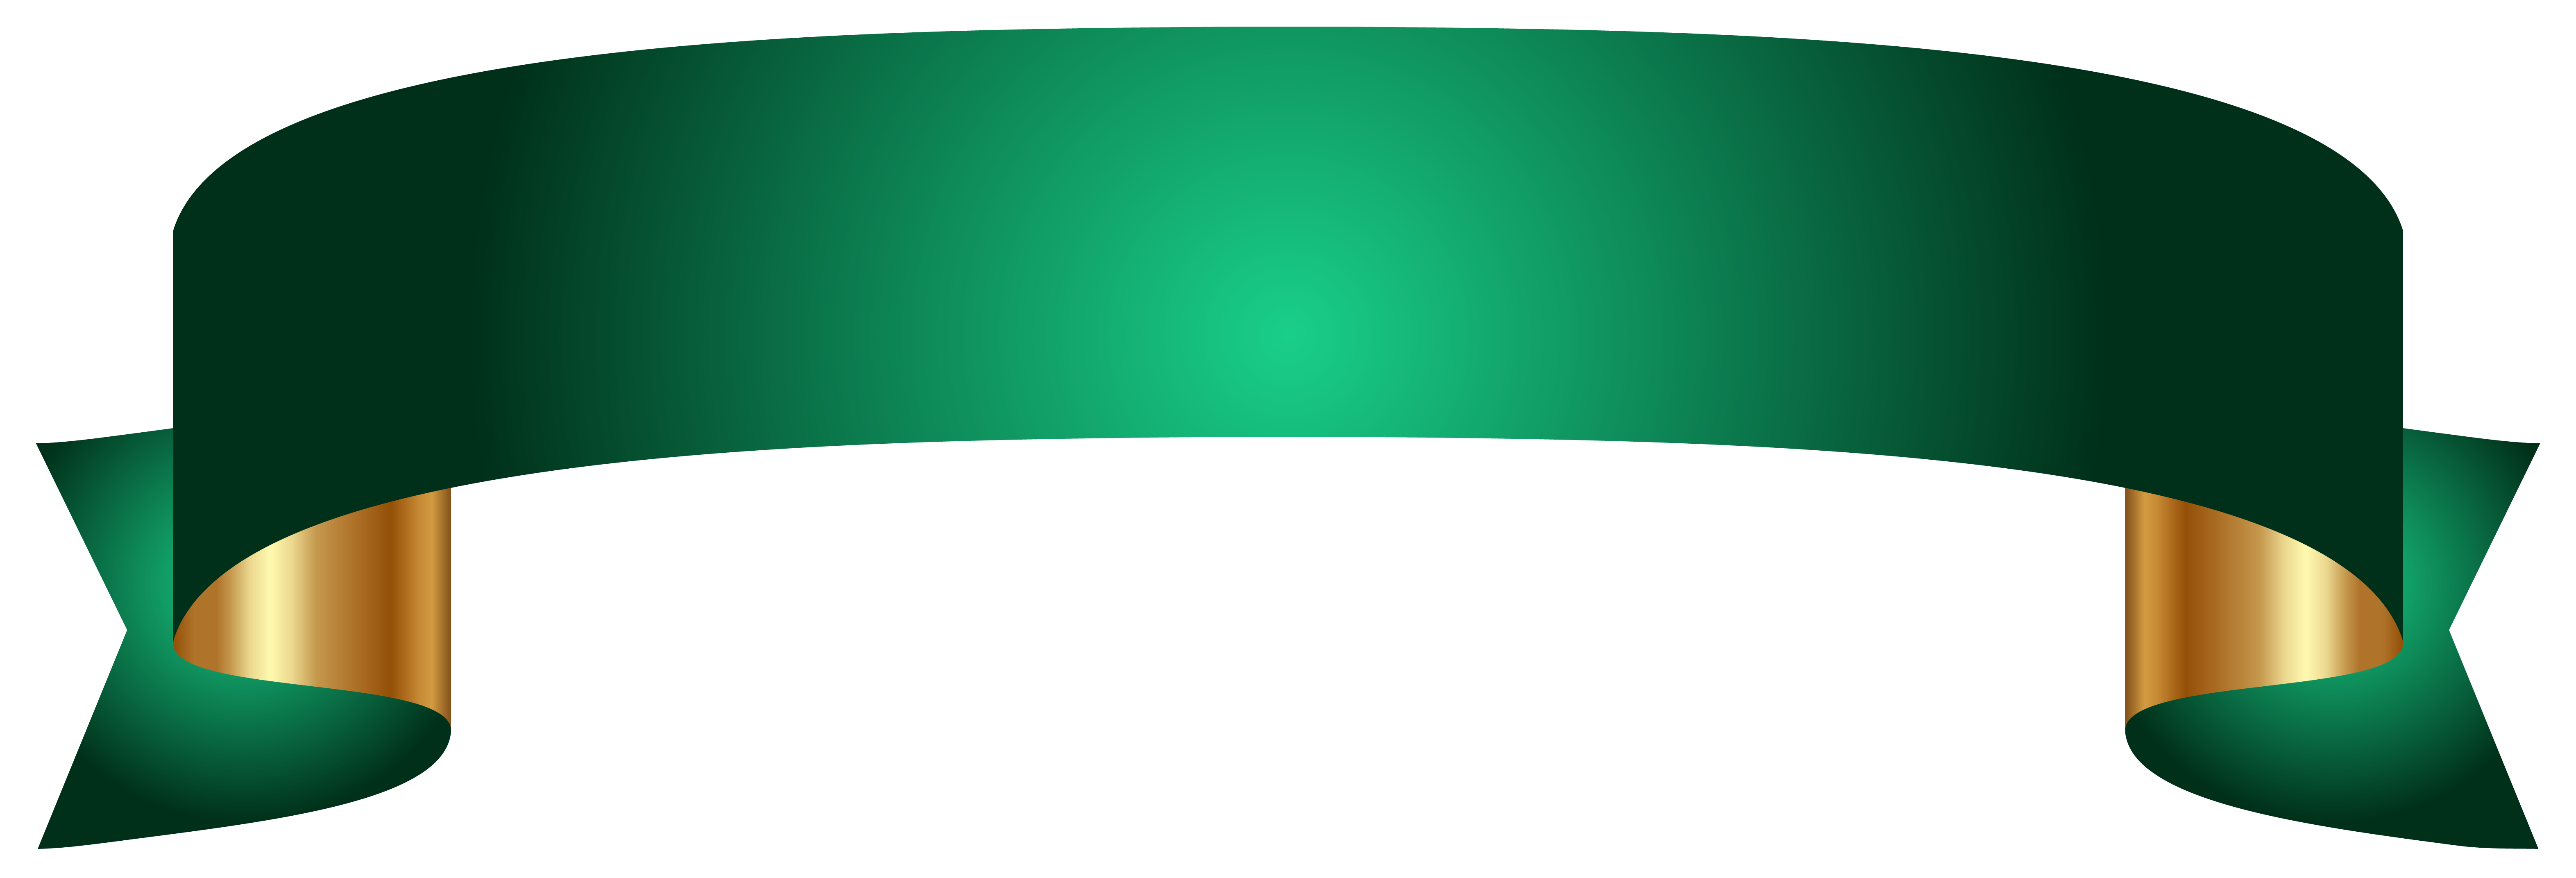 Green Banner Transparent PNG Clip Art Image